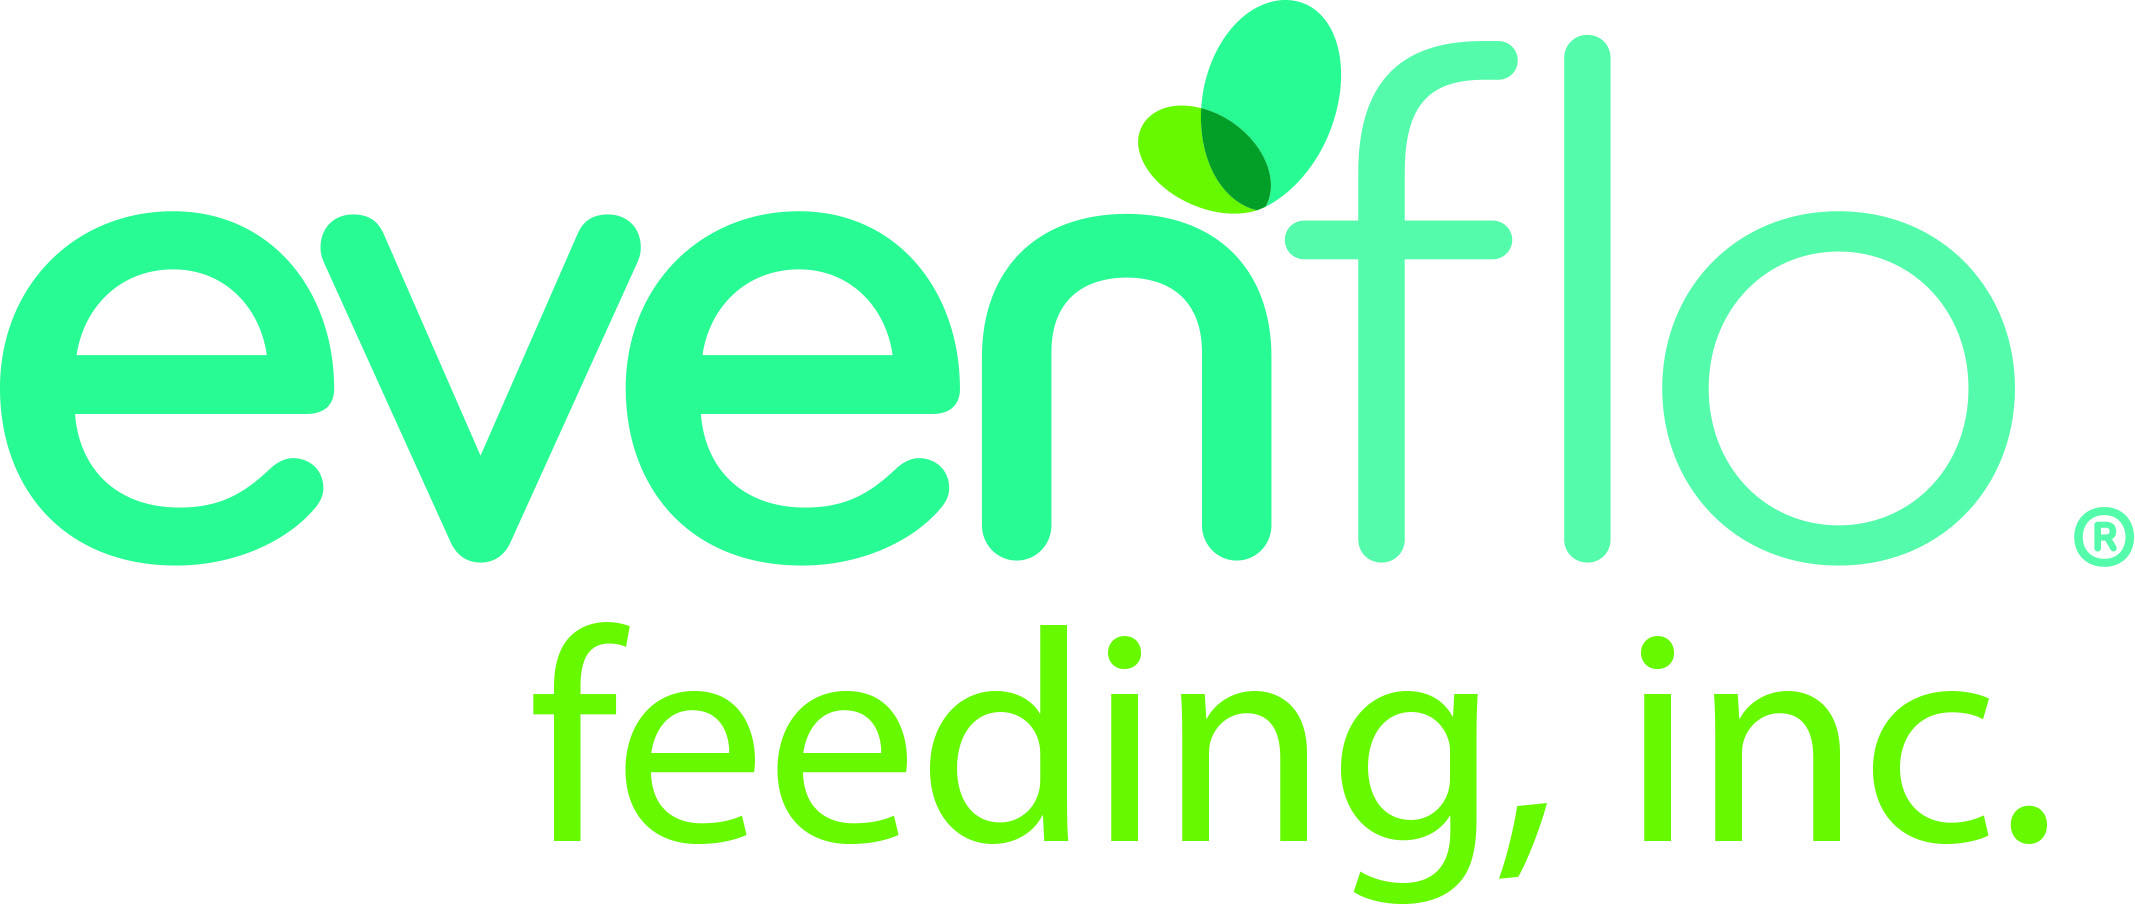 Evenflo Logo - EVENFLO FEEDING, INC. Chester, OH